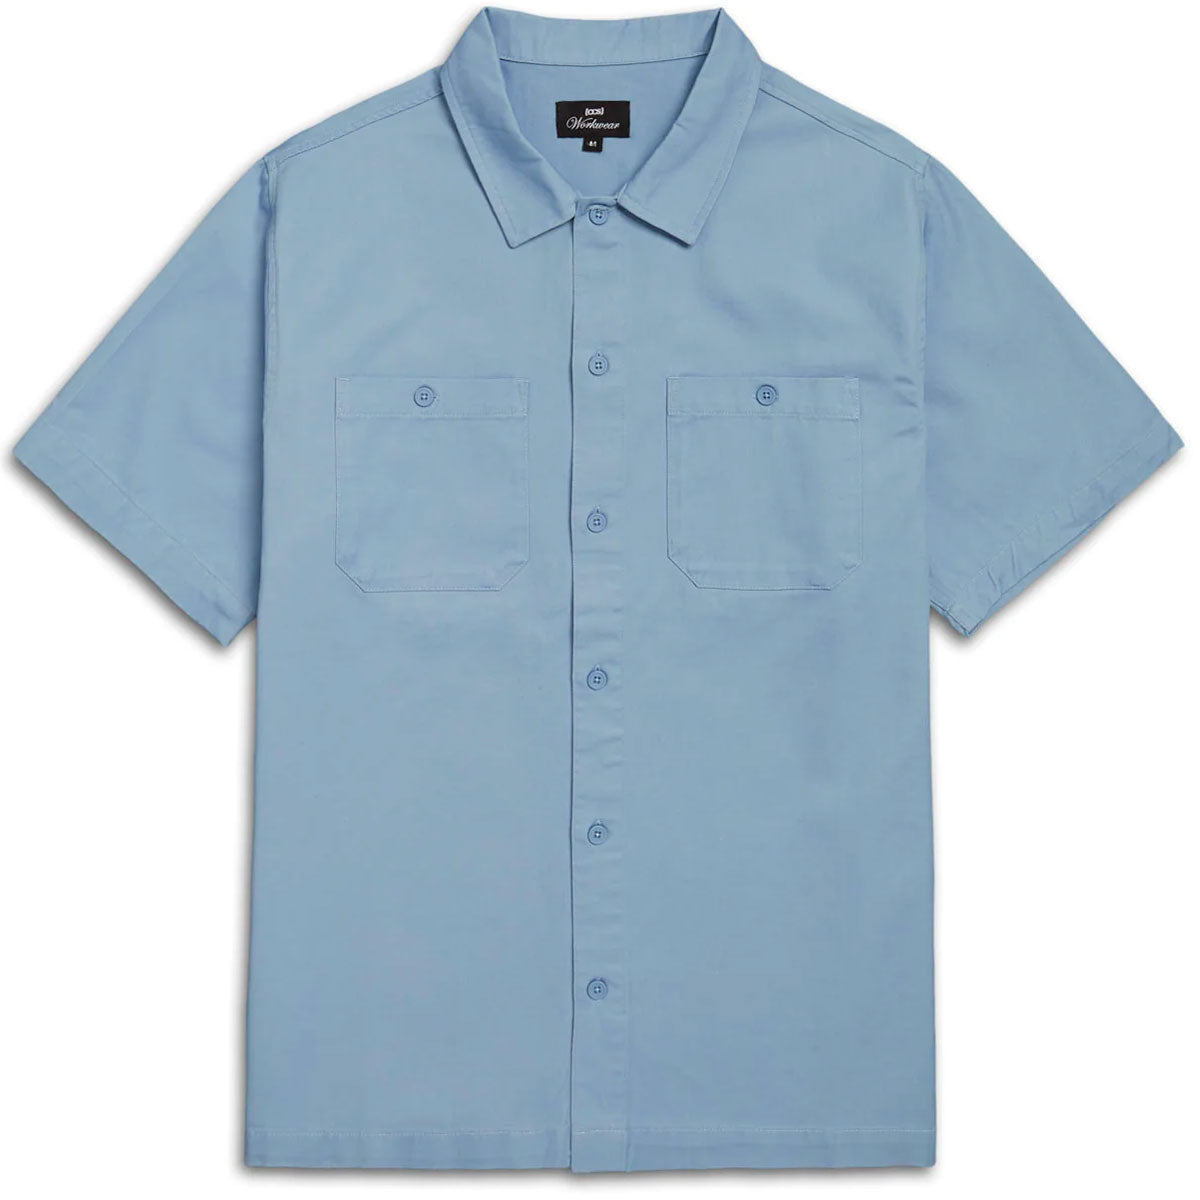 CCS Custom Embroidered Work Shirt - Light Blue image 2